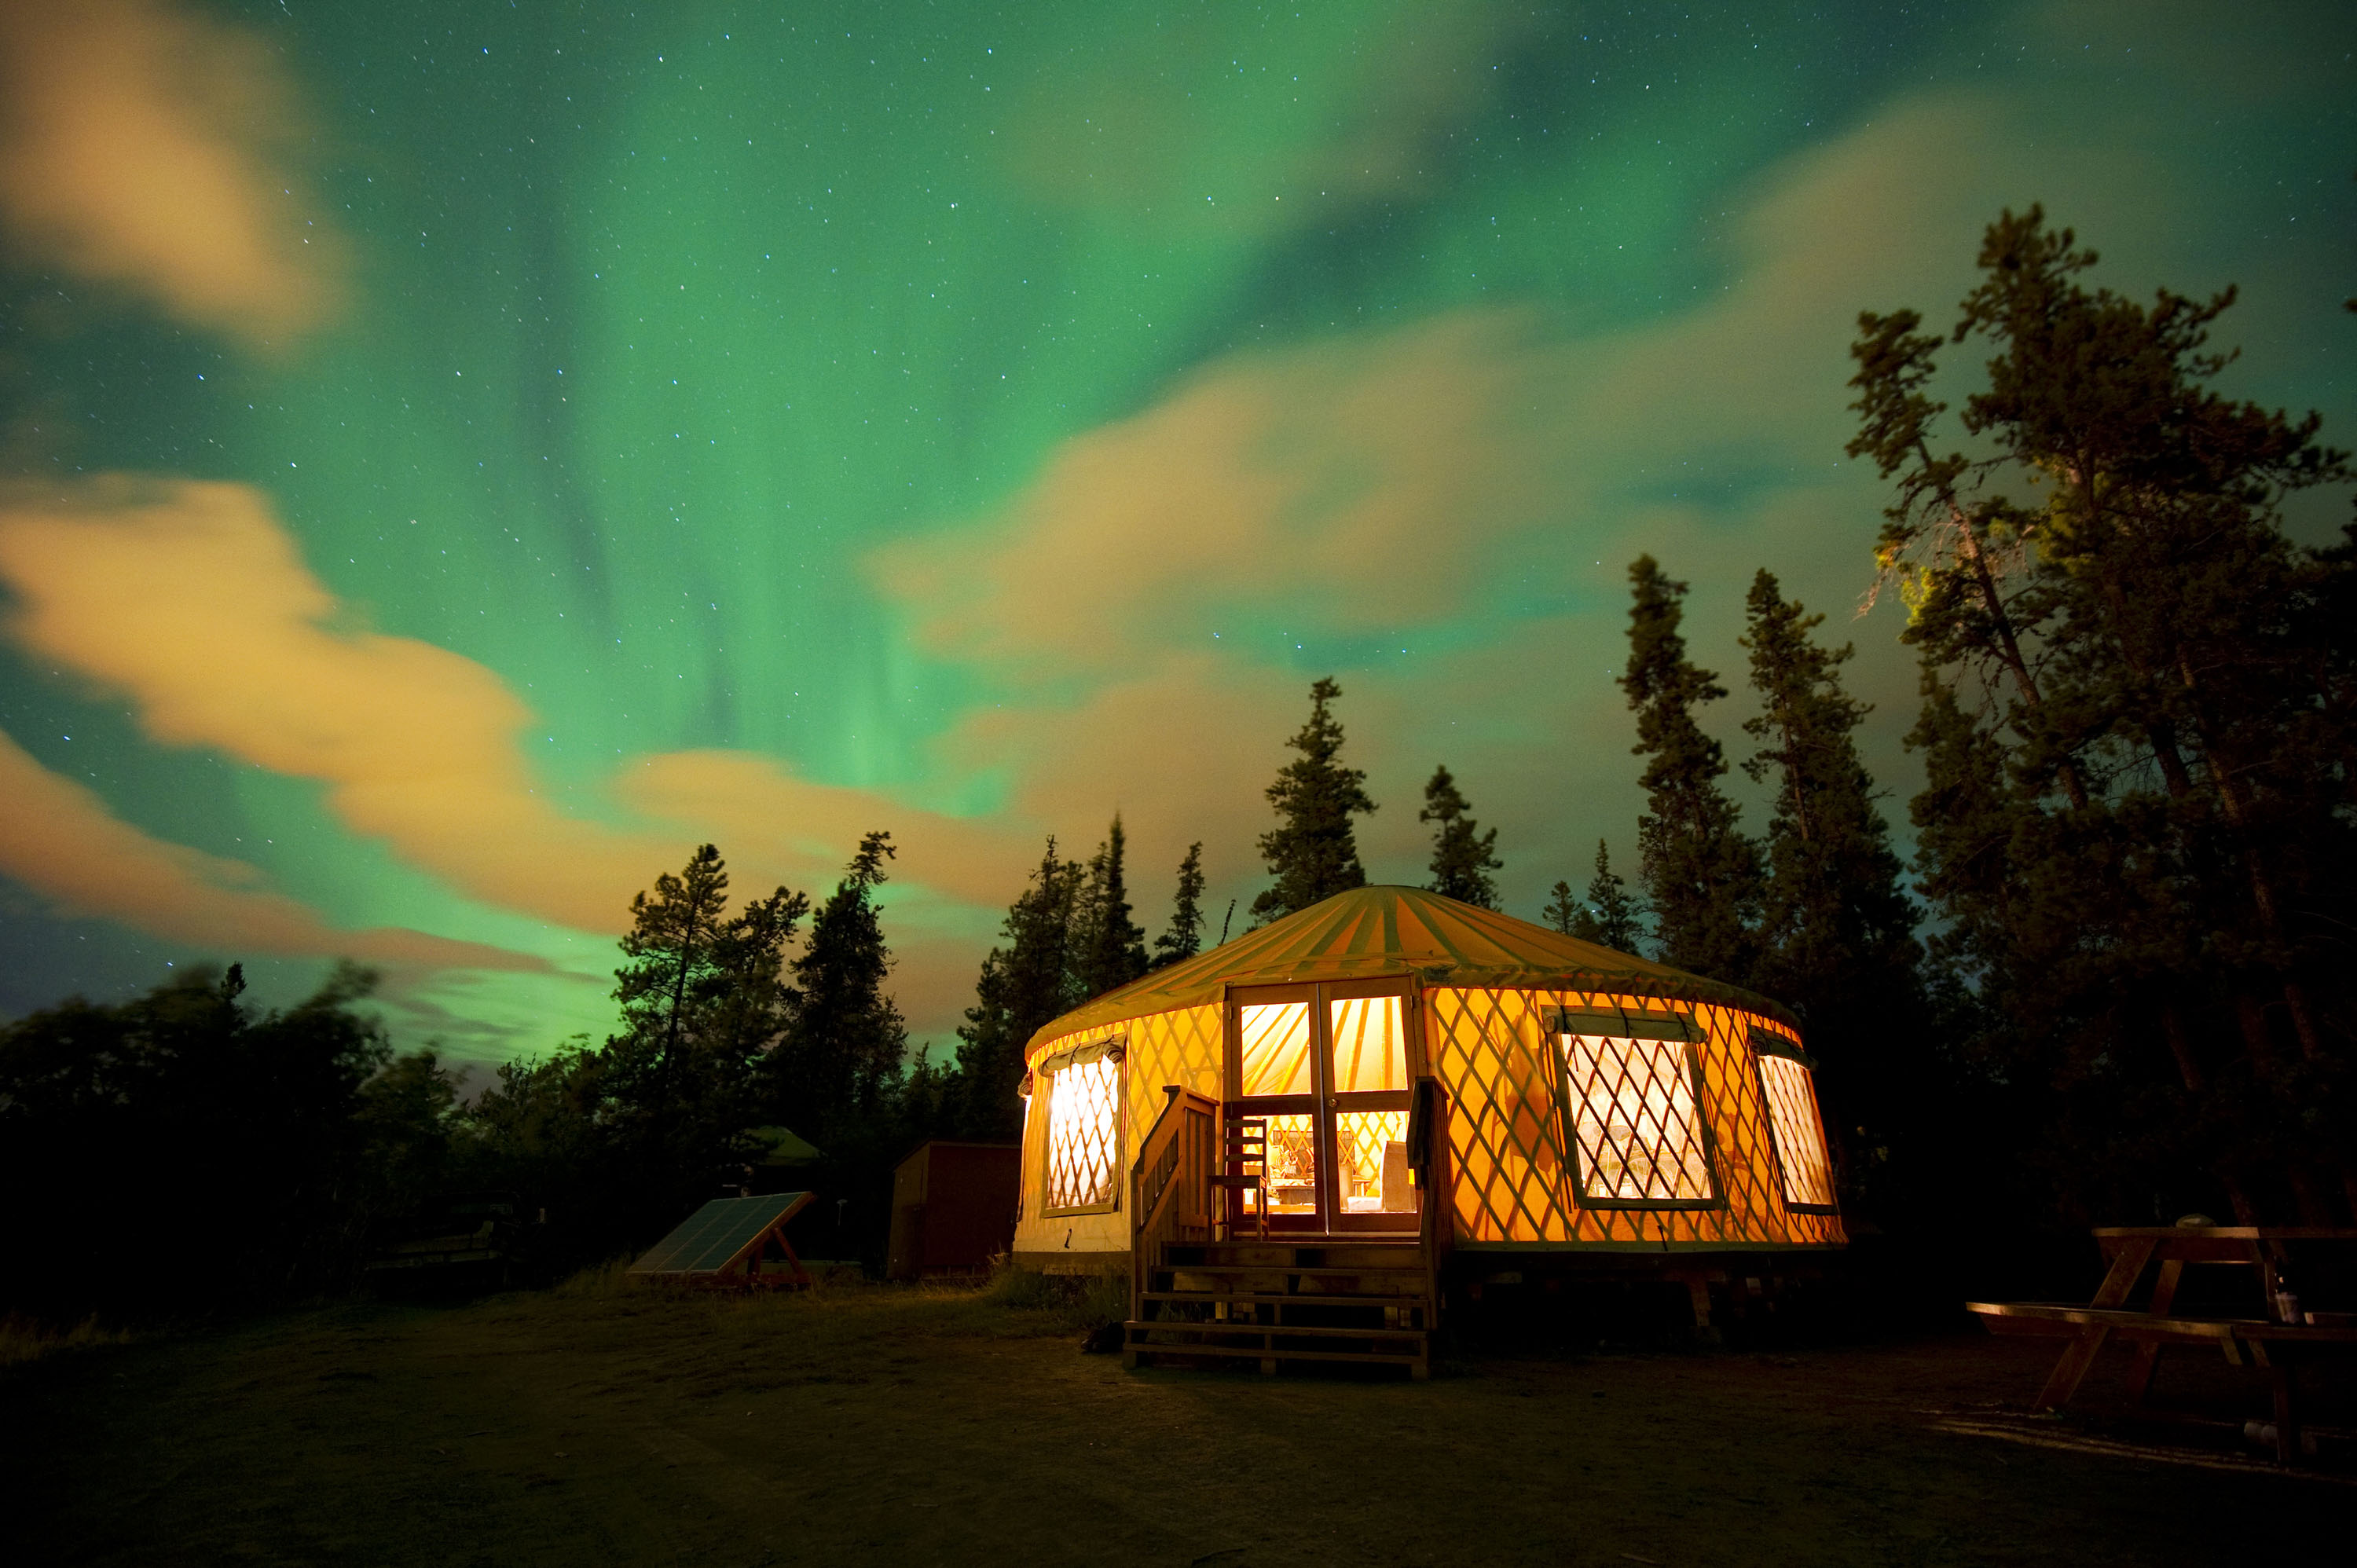 The Northern Lights over an illuminated yurt in the Yukon Territory, Canada.